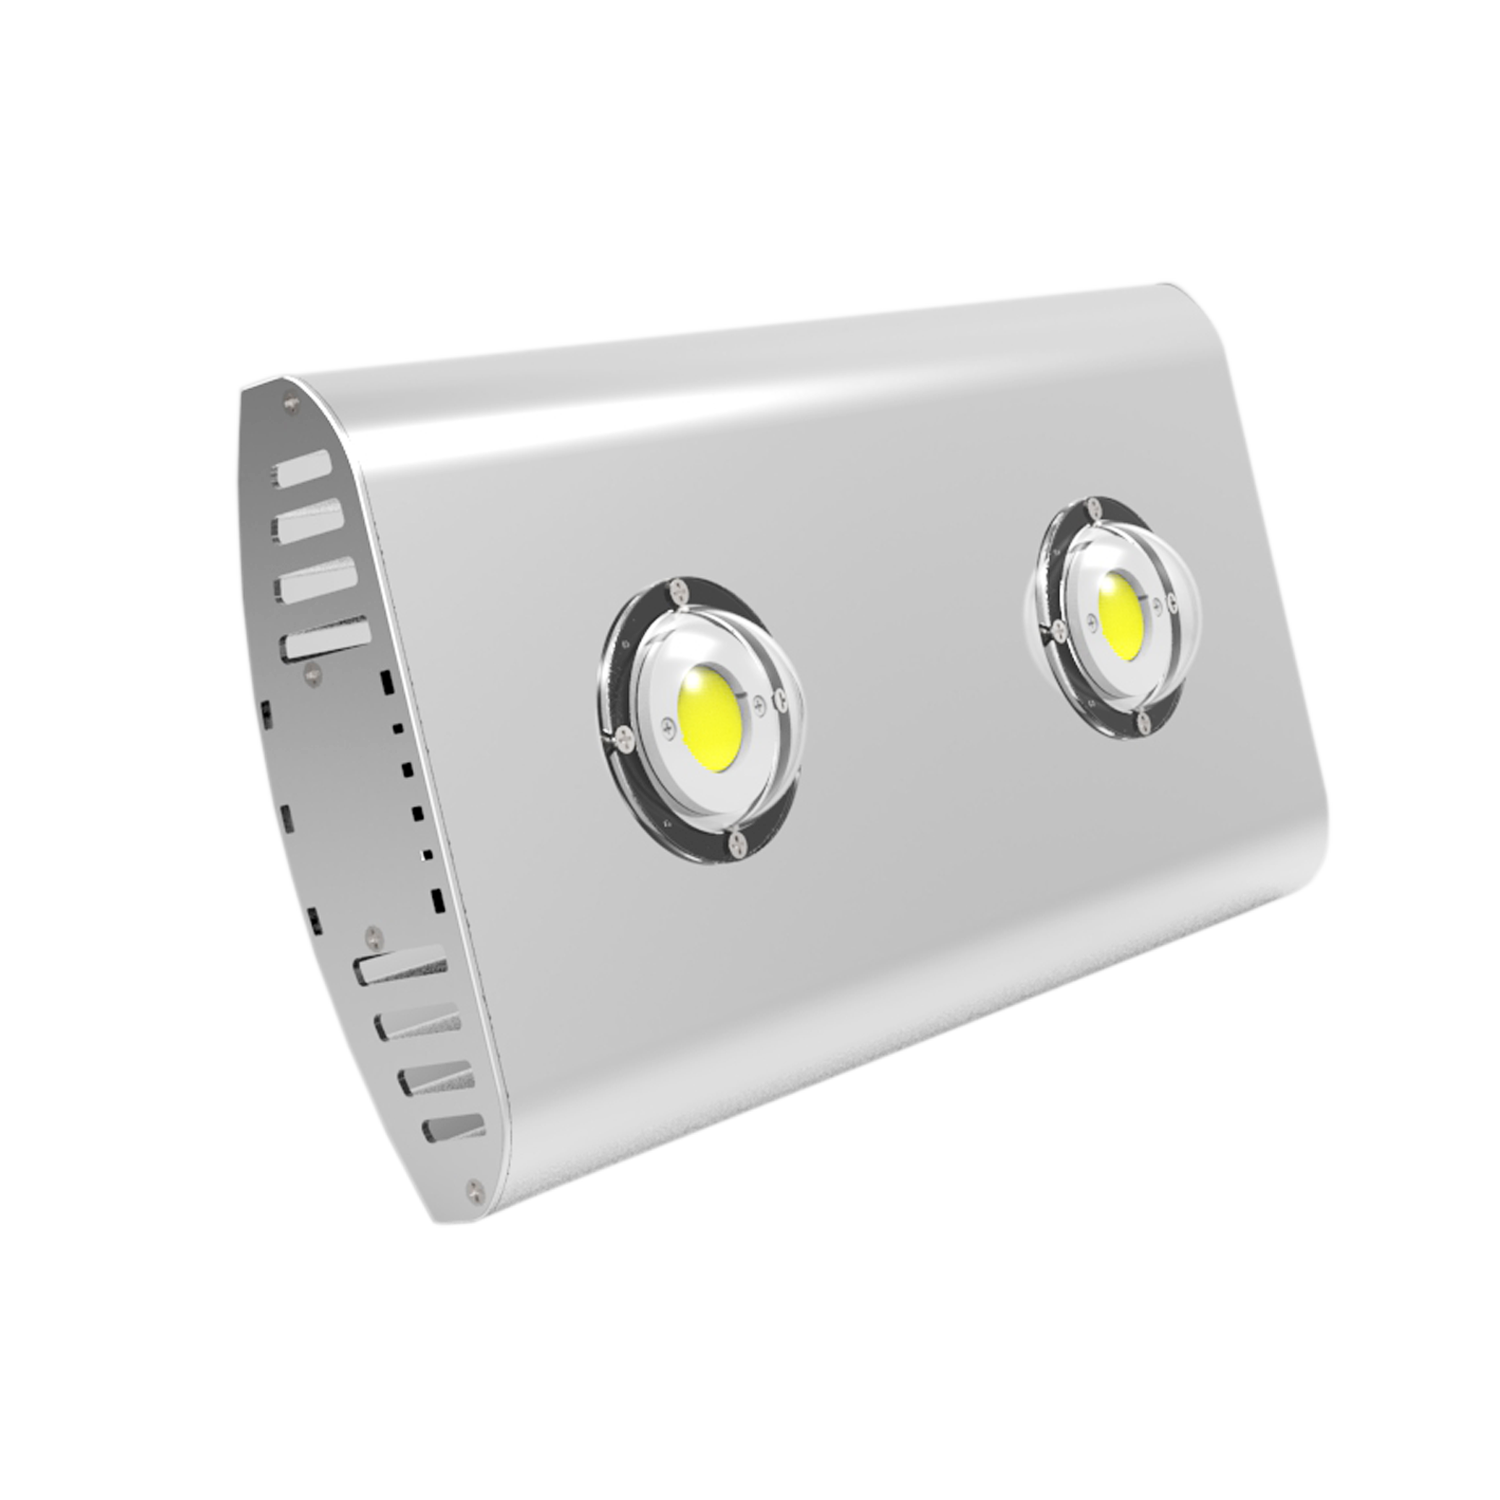 Aigostar - Confezione da 5 Faretto a LED COB, 100W, 9000LM, Impermeabile IP65, Luce Naturale 4000K[Classe di efficienza energetica A+]